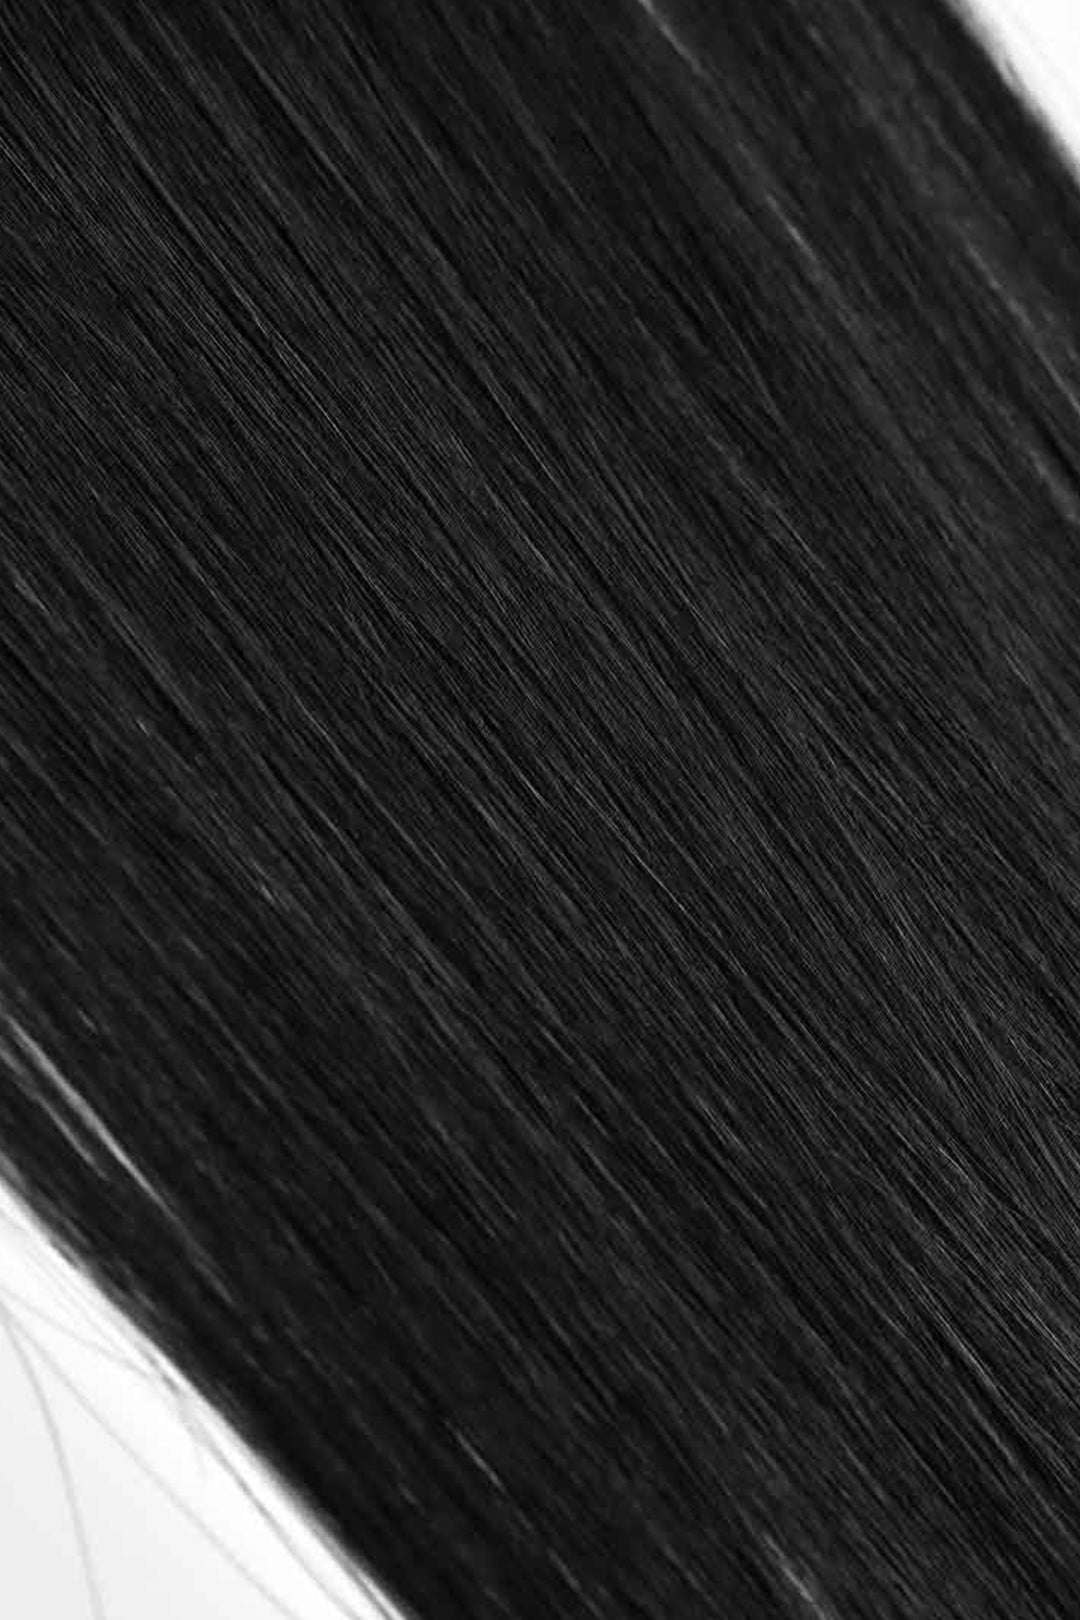 AVERA #1B Black Tape-In Hair Extension